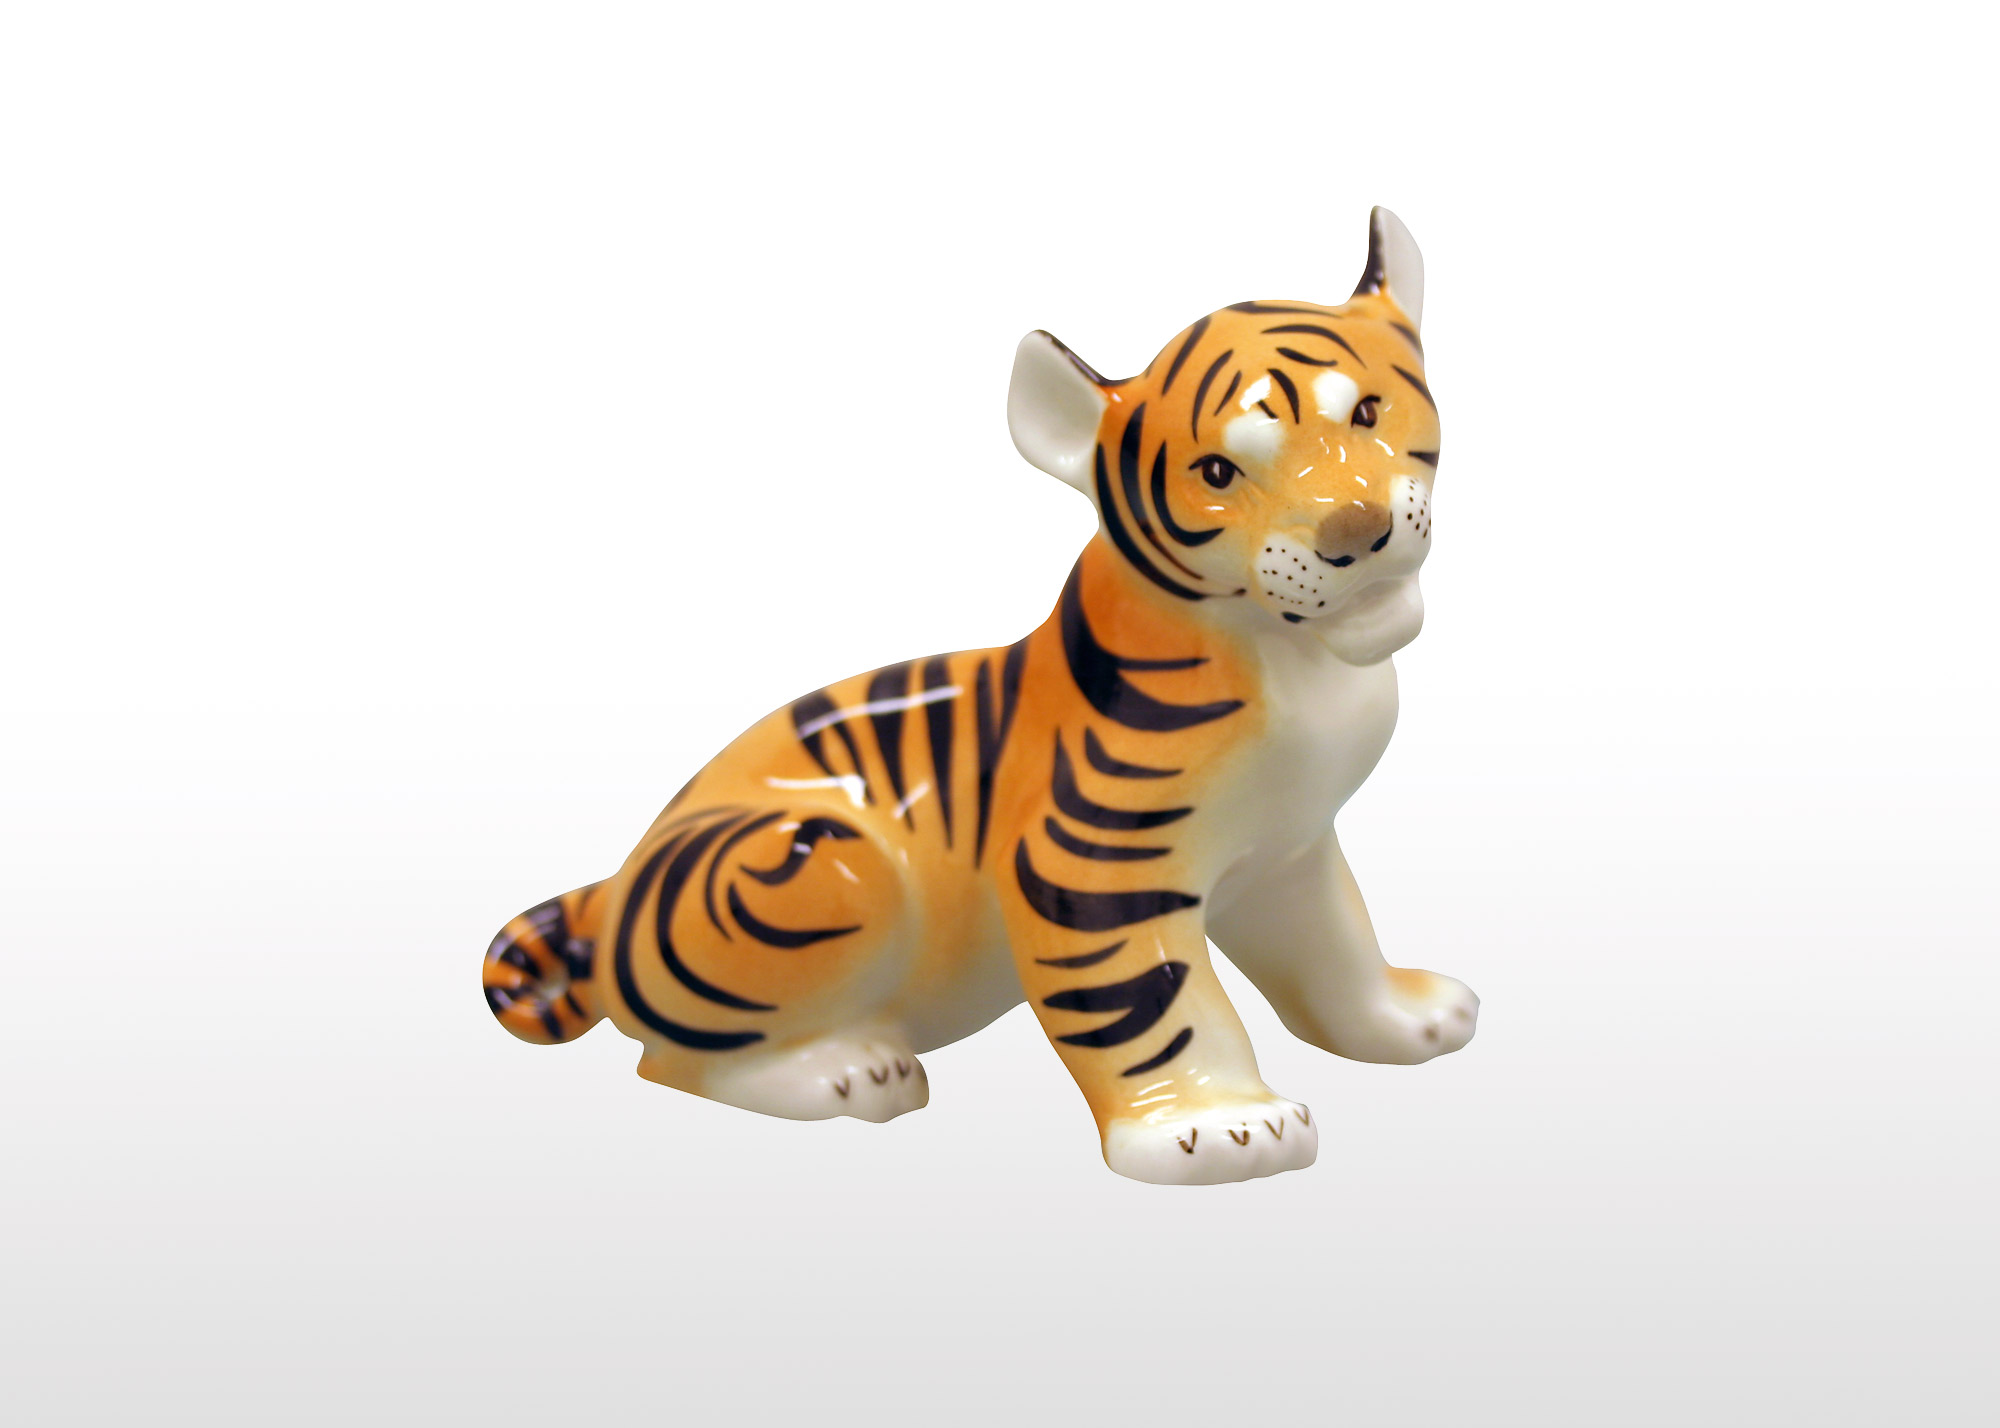 Buy Bengal Tiger Cub Figurine at GoldenCockerel.com